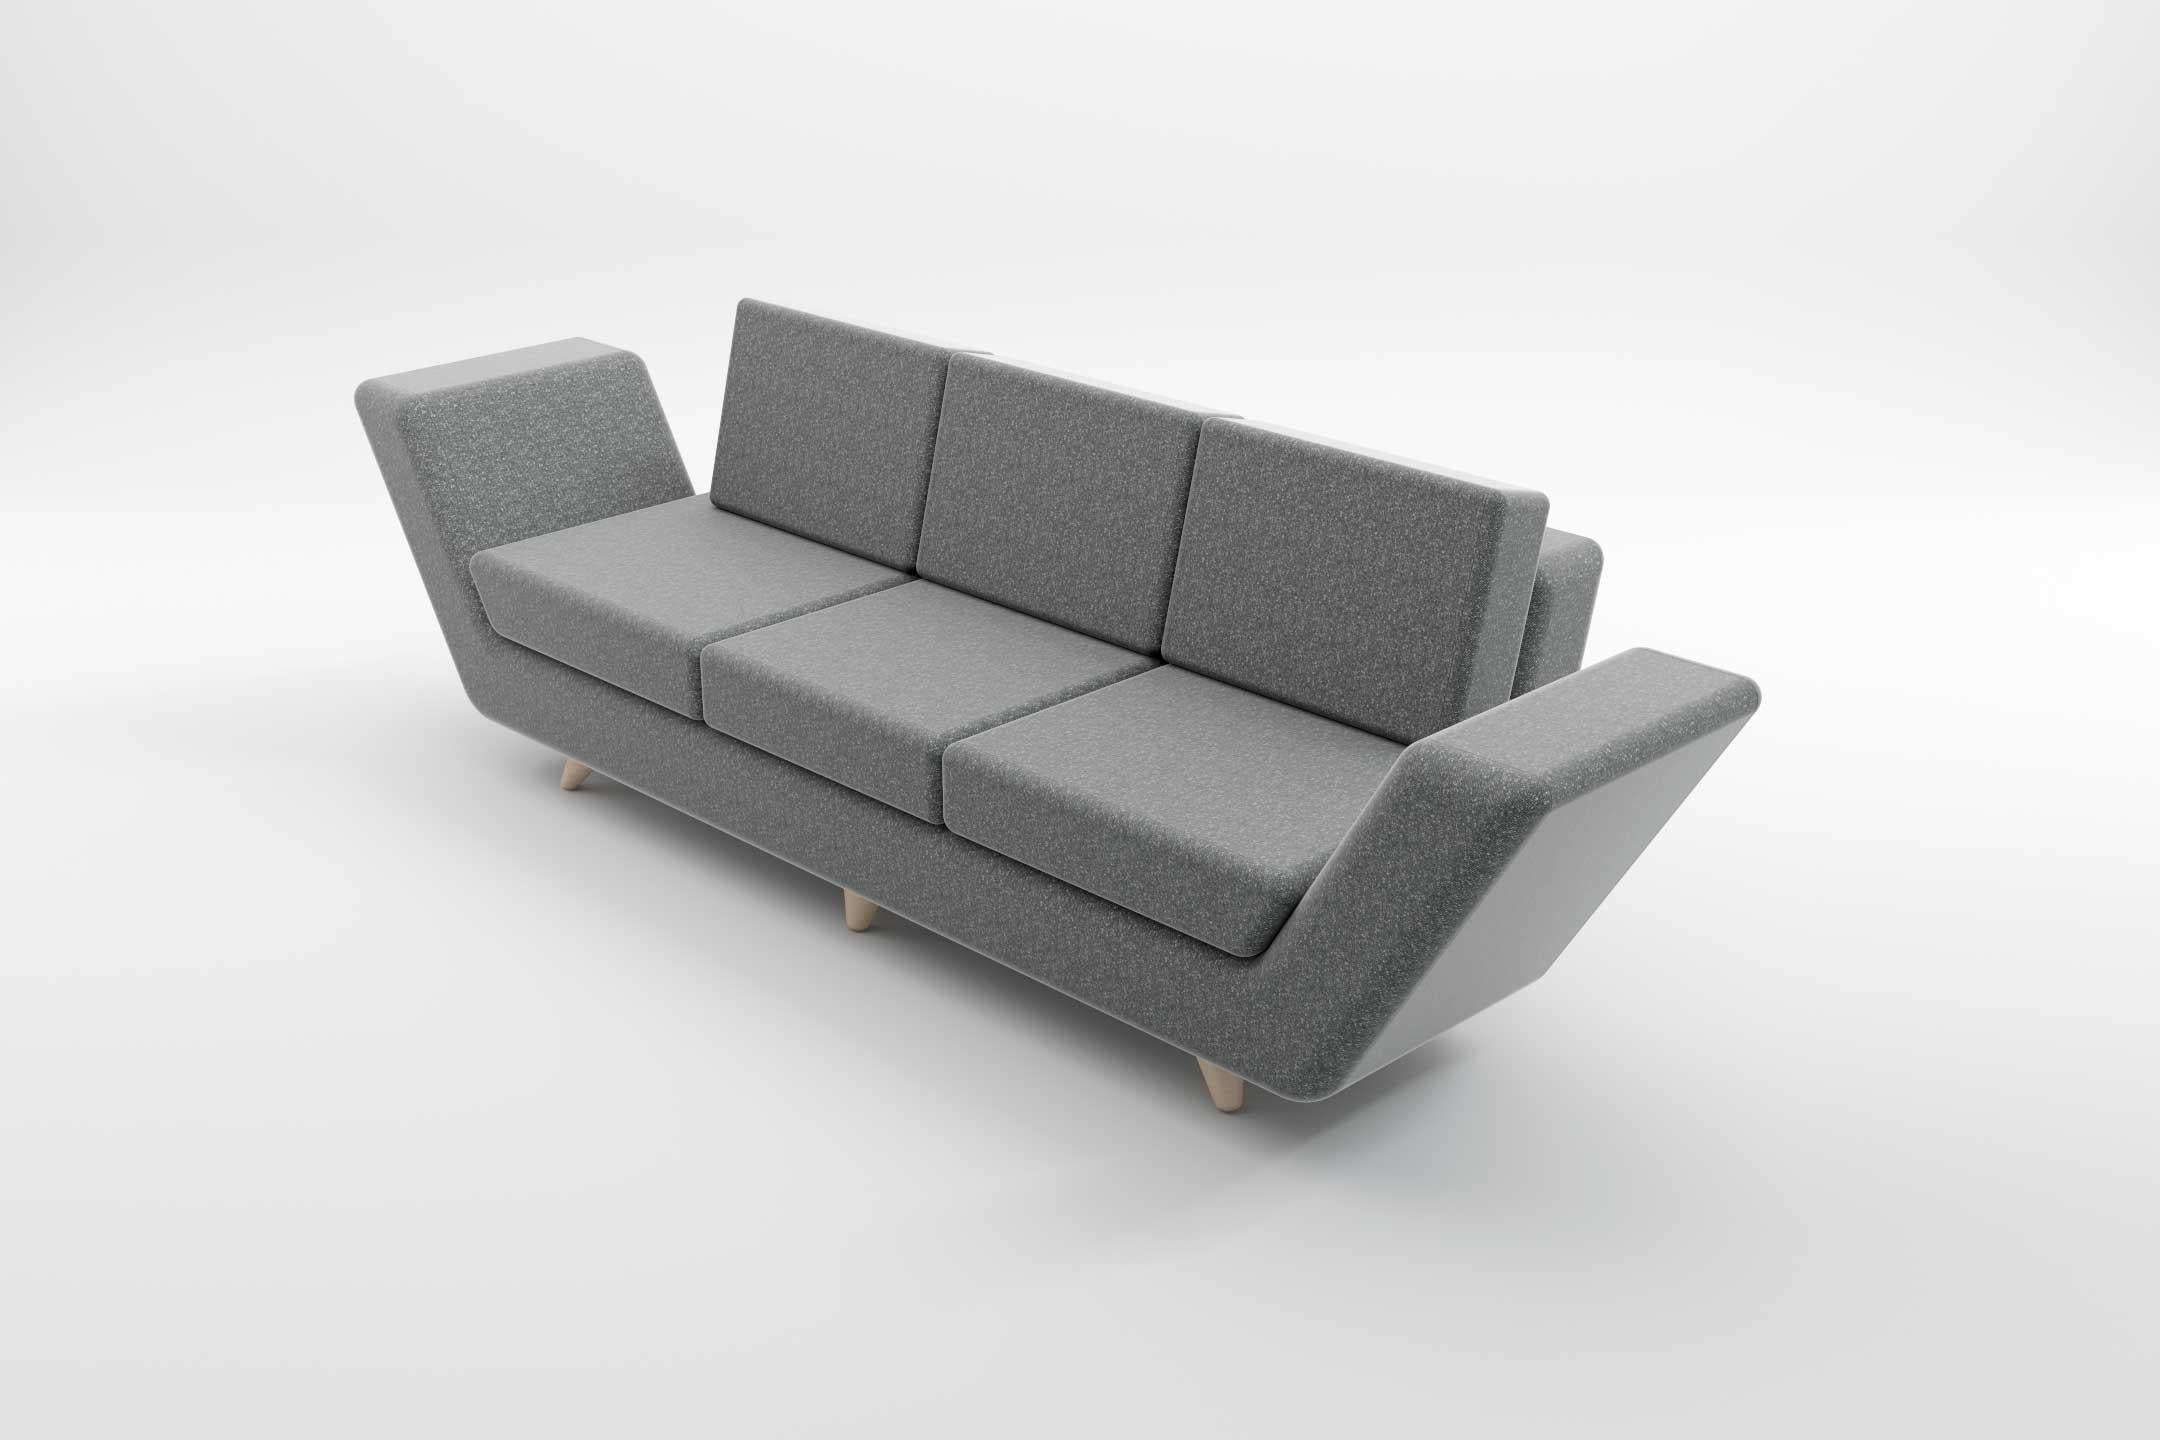 European Apex 3 Seat Sofa - Modern Scandinavian Sofa with Wooden Legs For Sale